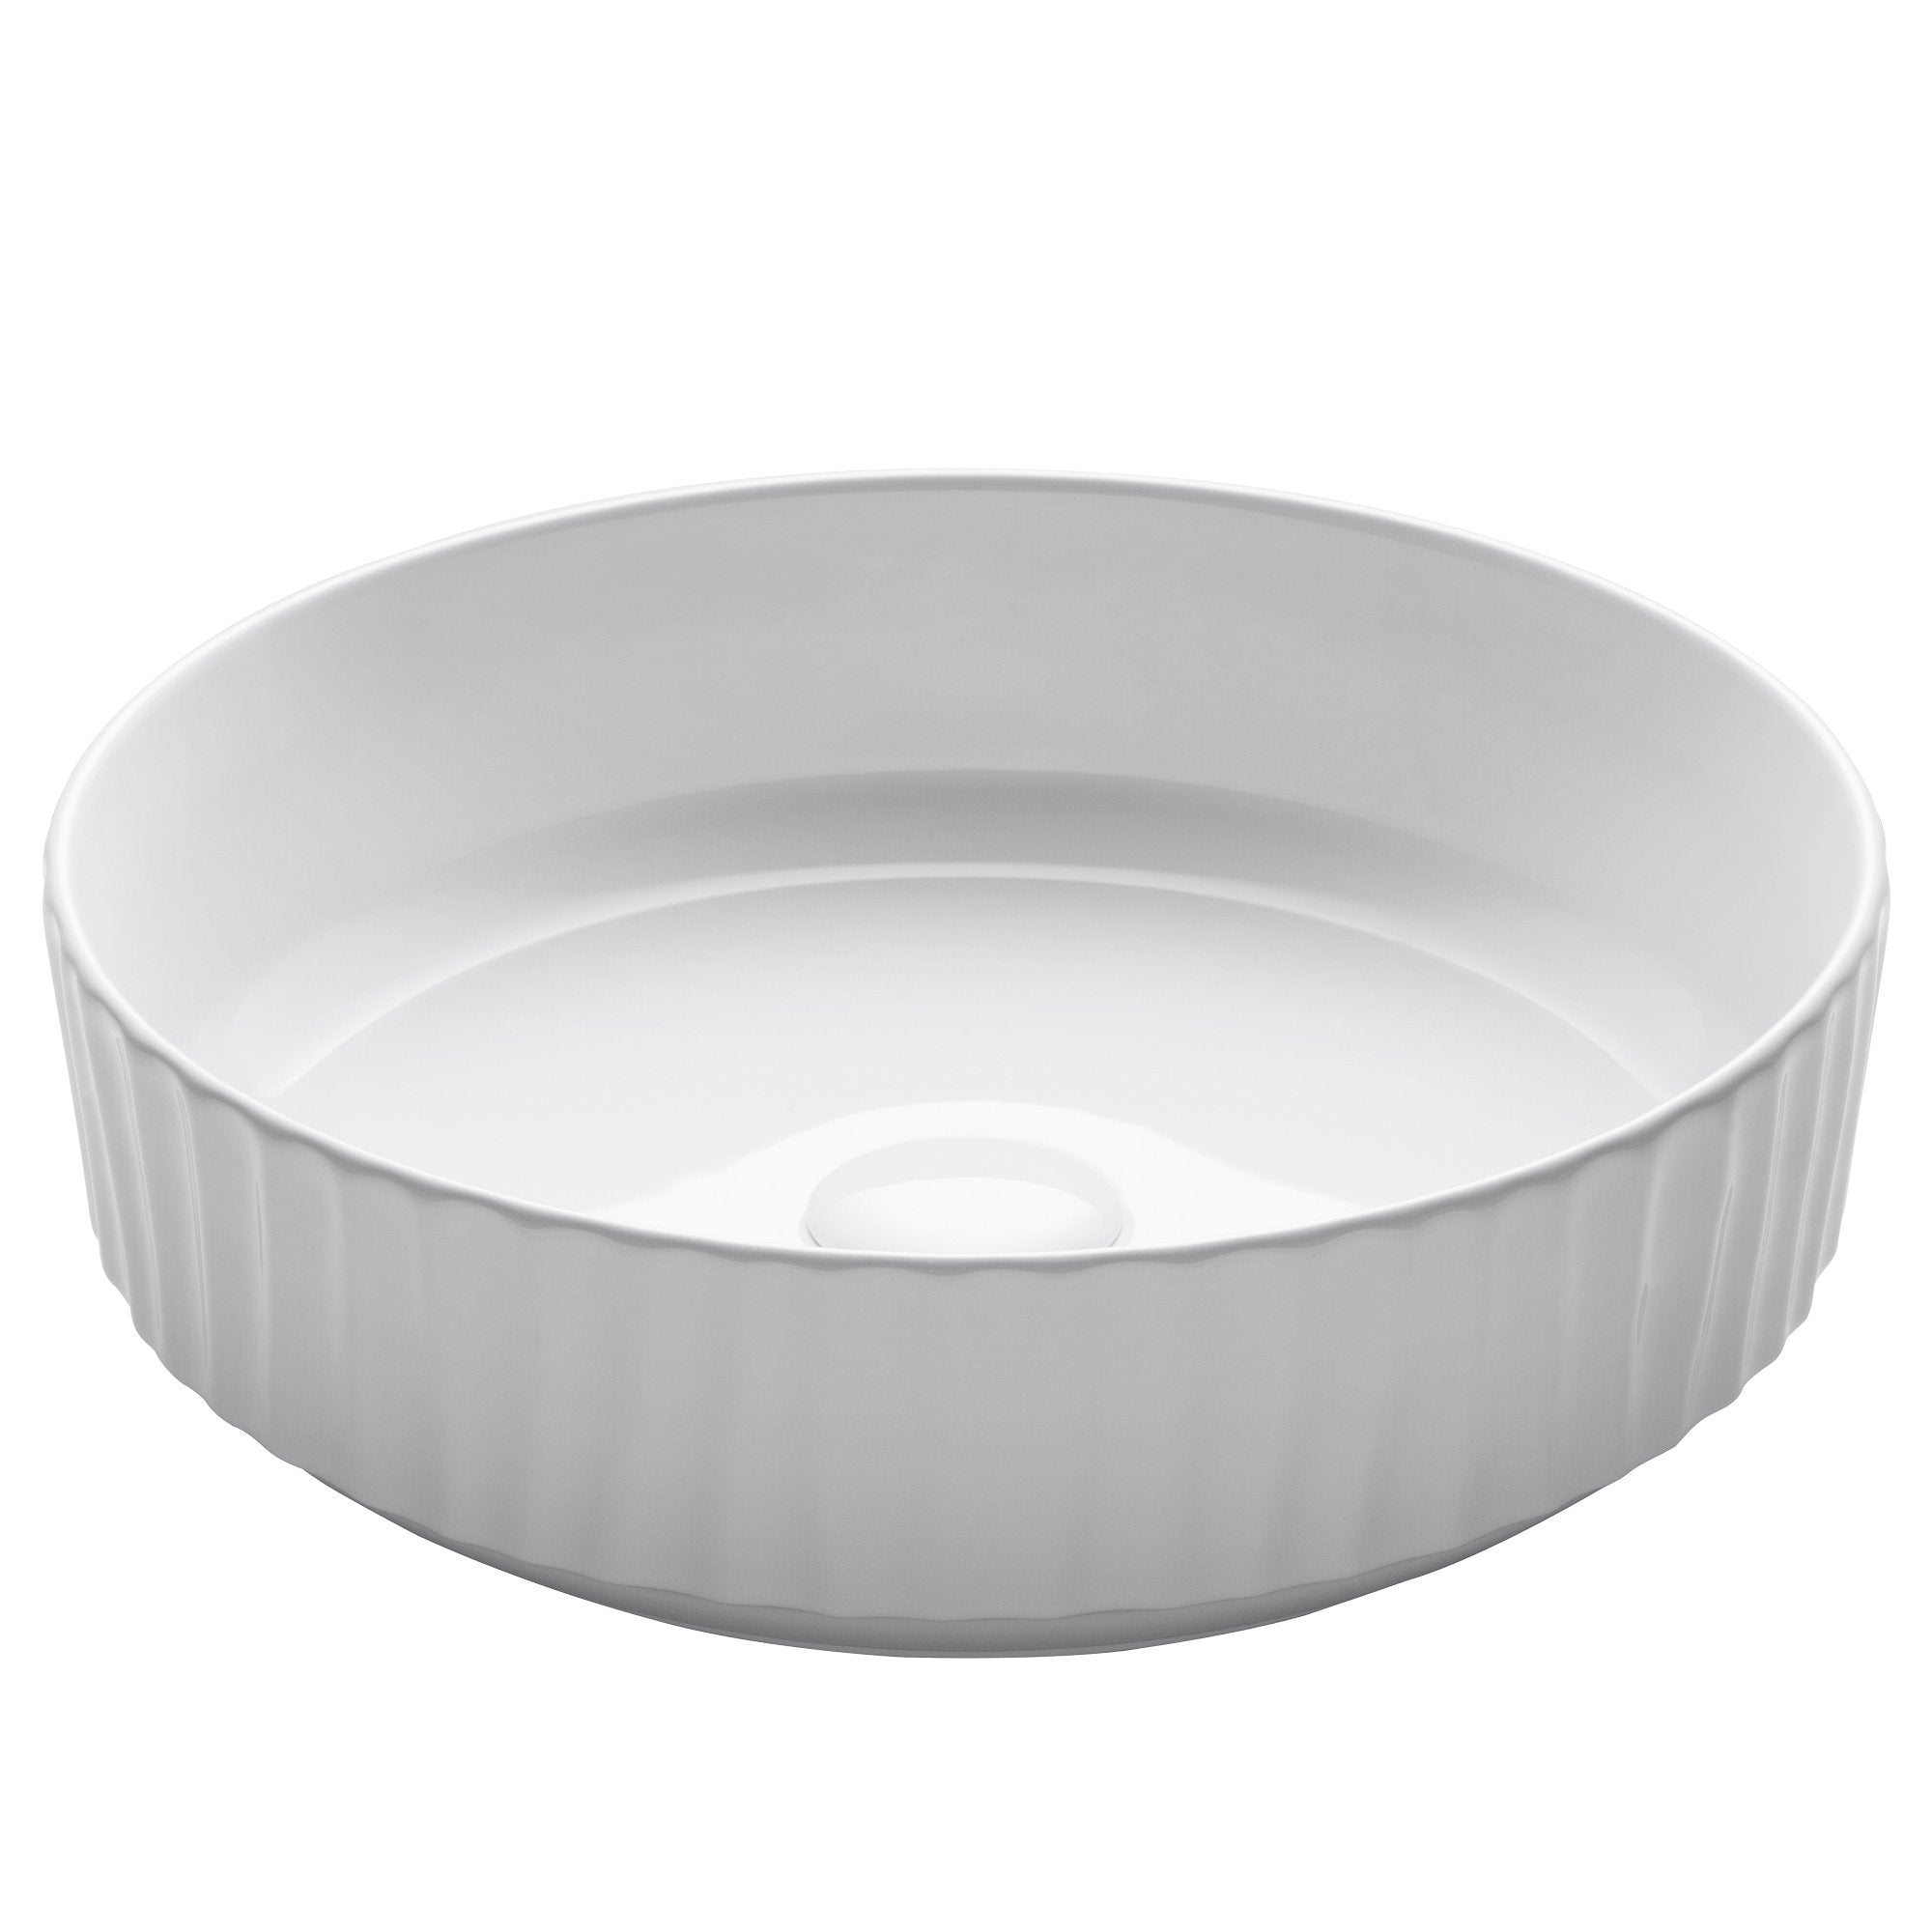 KRAUS Viva„¢ 15.75 Inch Round White Porcelain Ceramic Vessel Bathroom Sink-Bathroom Sinks-KRAUS